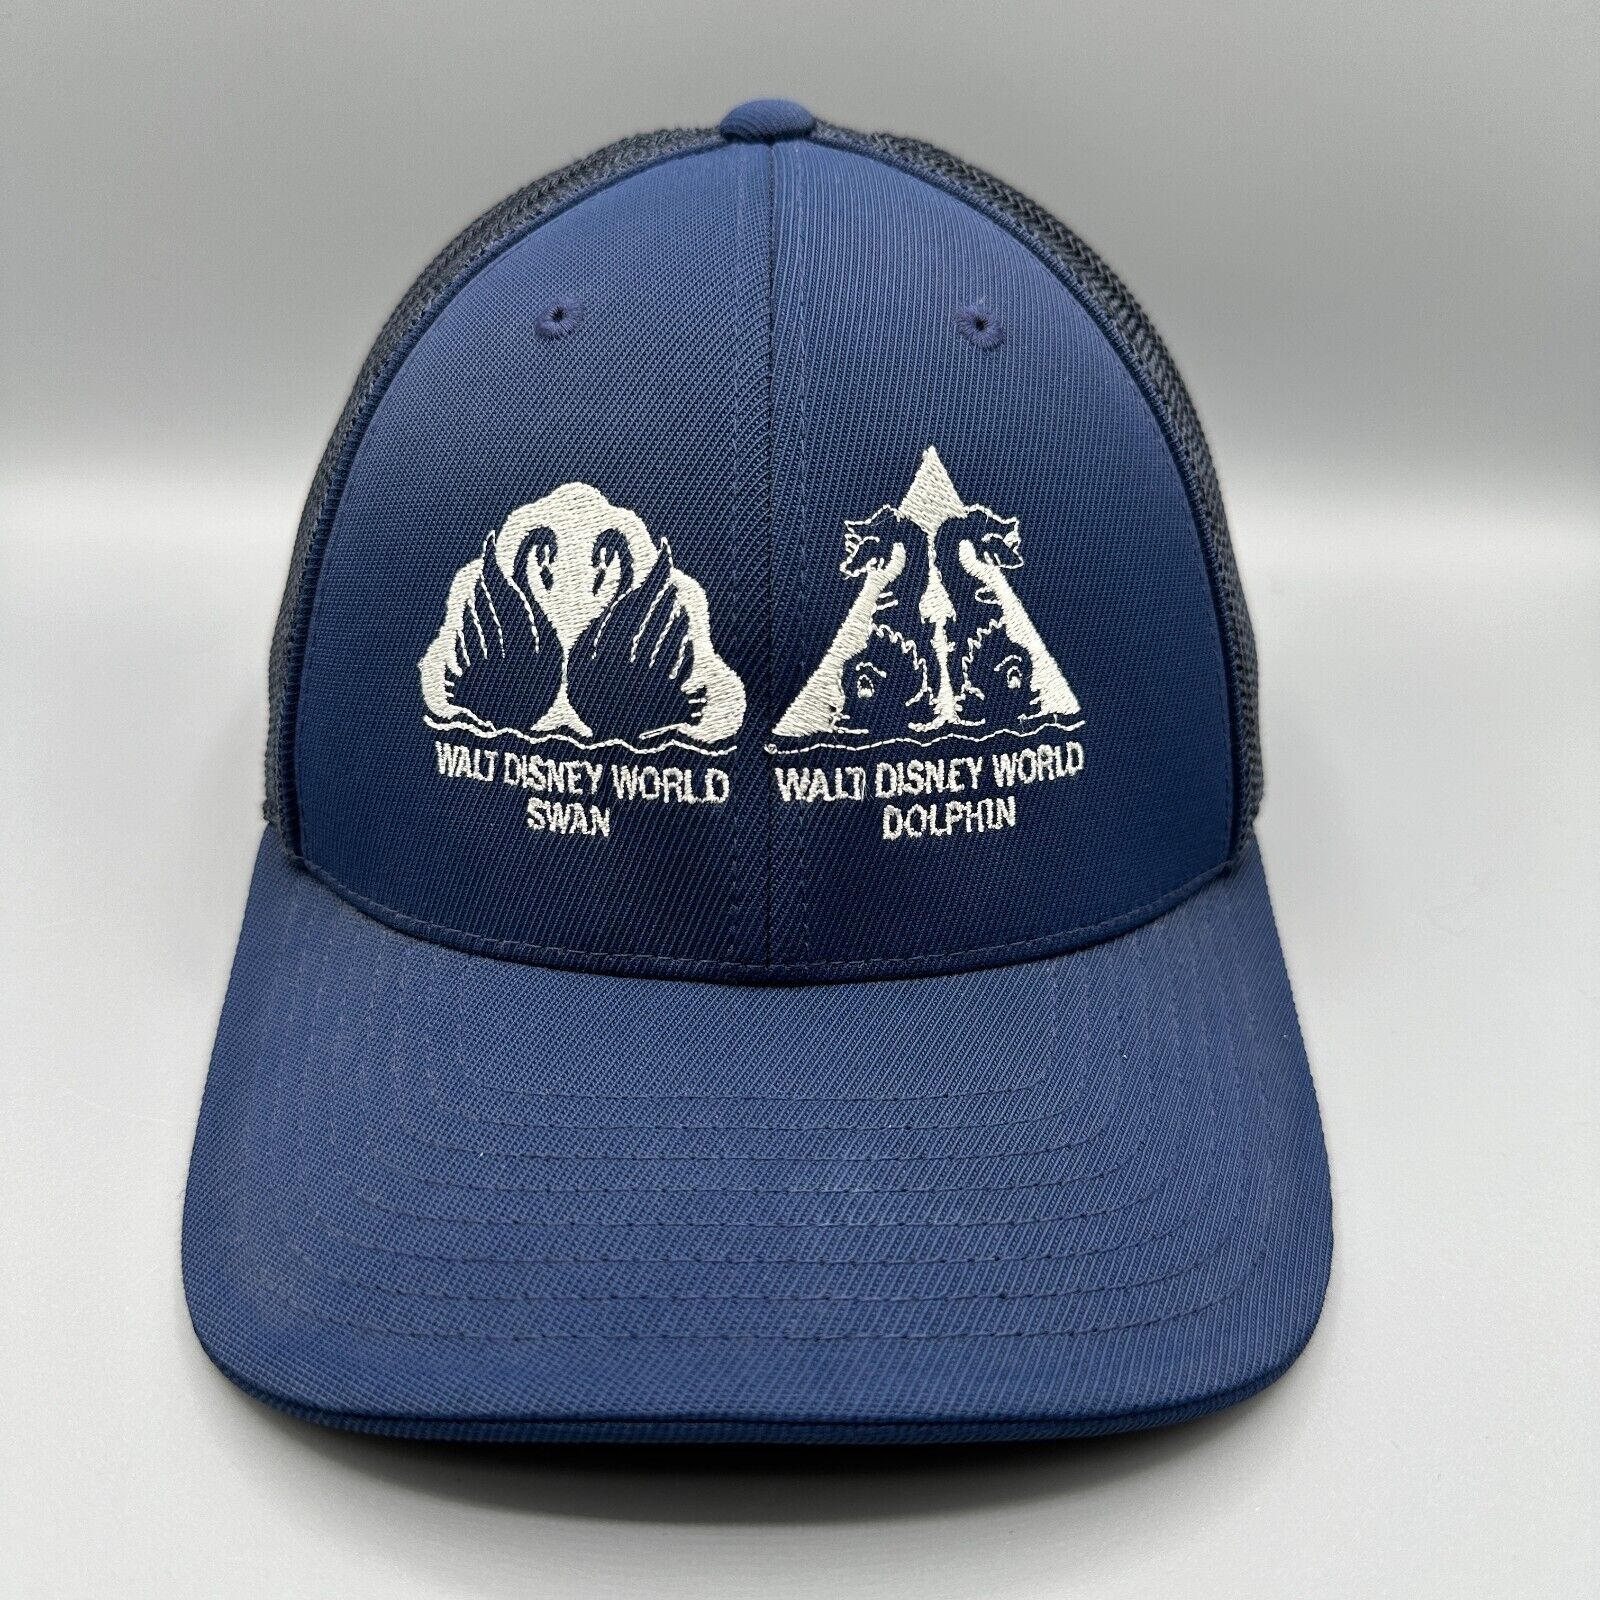 Walt Disney World Swan Dolphin Hotel Hat Adult S/M Pacific Headwear Blue Cap